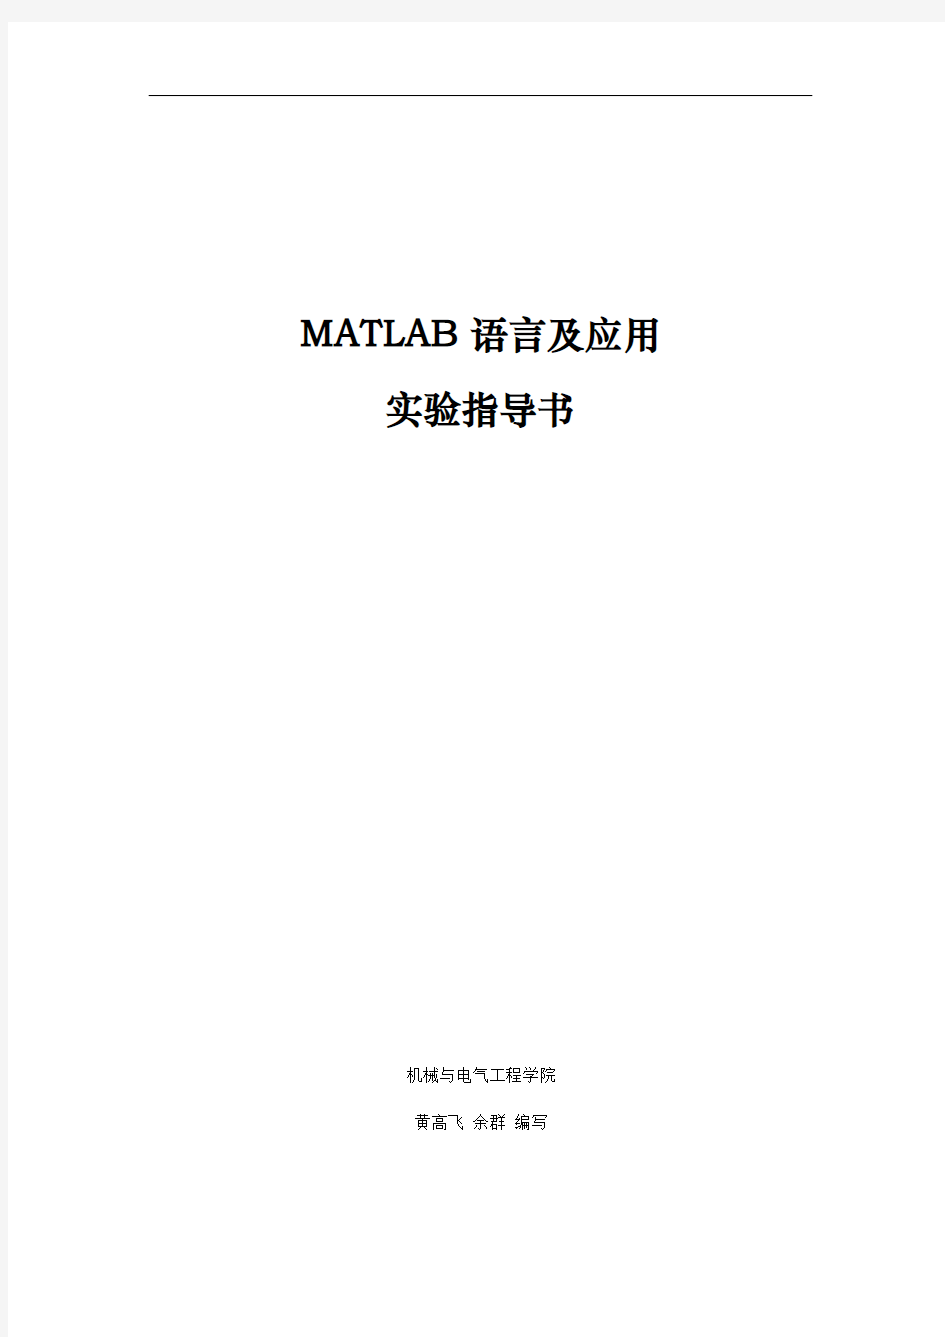 MATLAB实验指导书(2013)解析